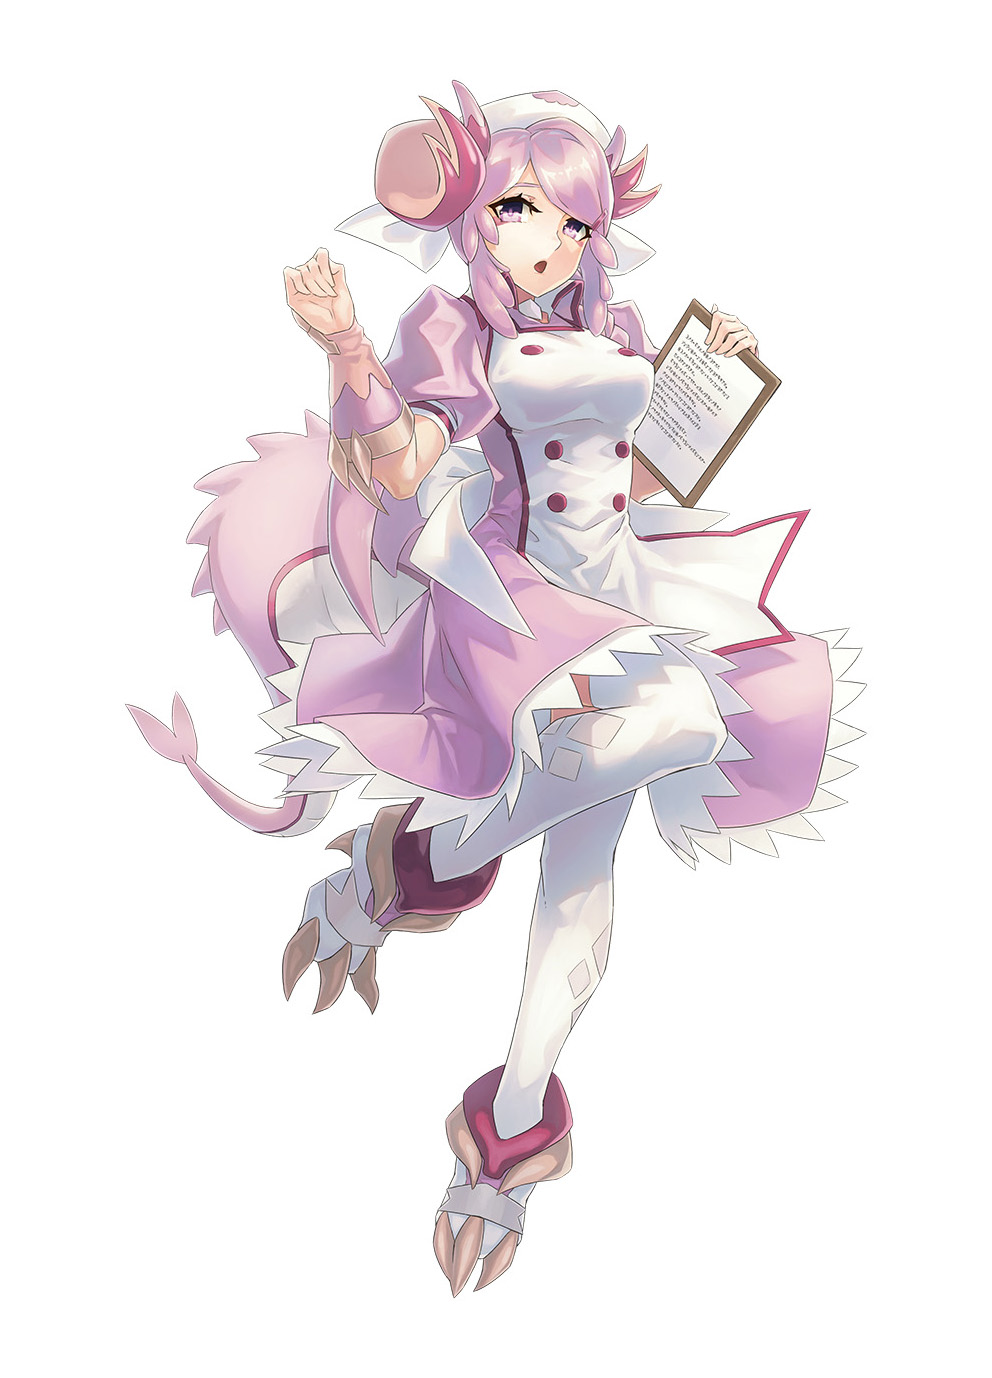 Anime 992x1378 anime anime girls Trading Card Games Nurse Dragonmaid shoulder length hair pink hair maid maid outfit artwork digital art fan art